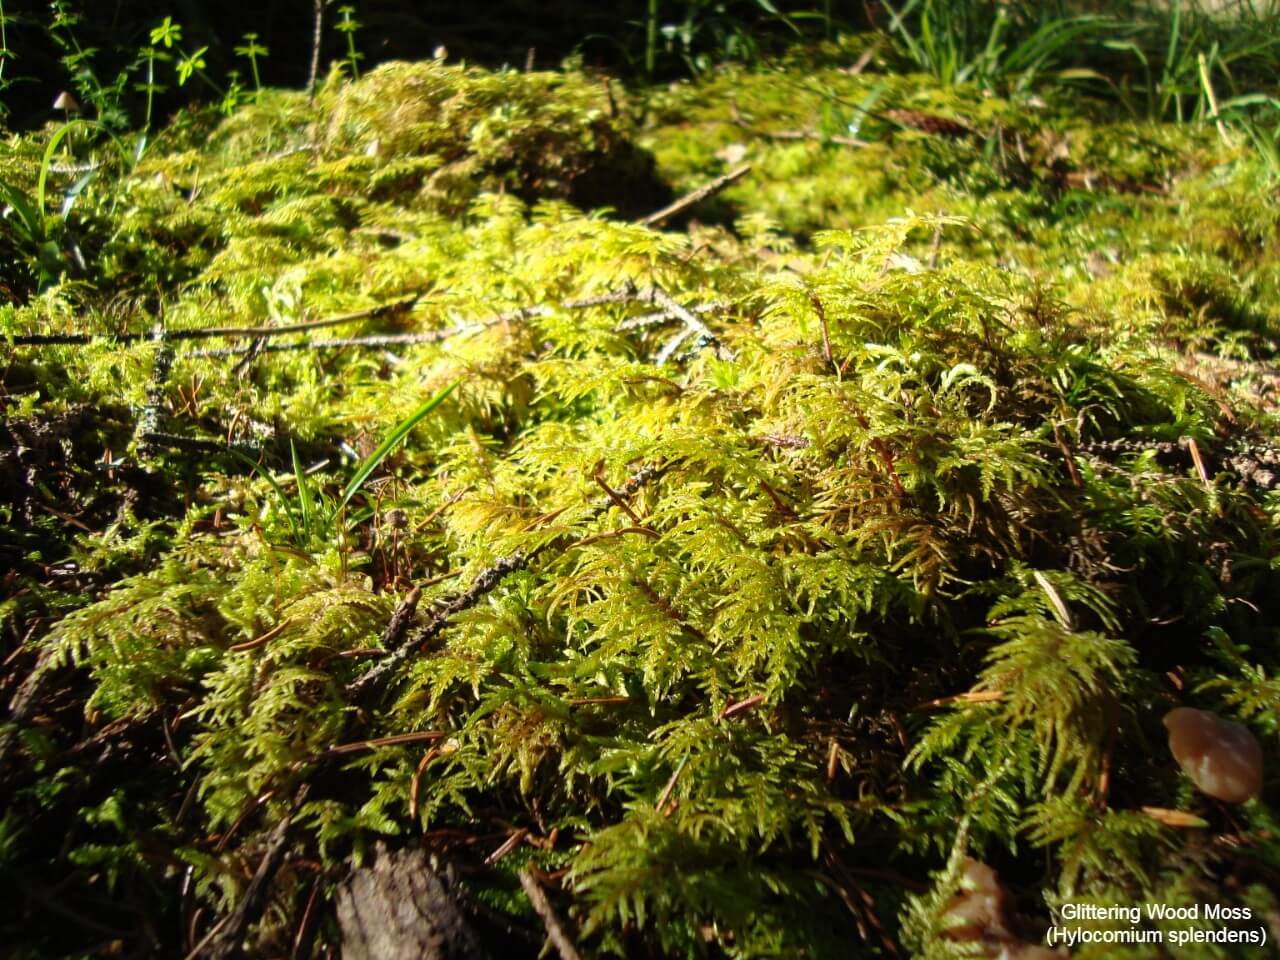 Glittering Wood Moss (Hylocomium splendens)